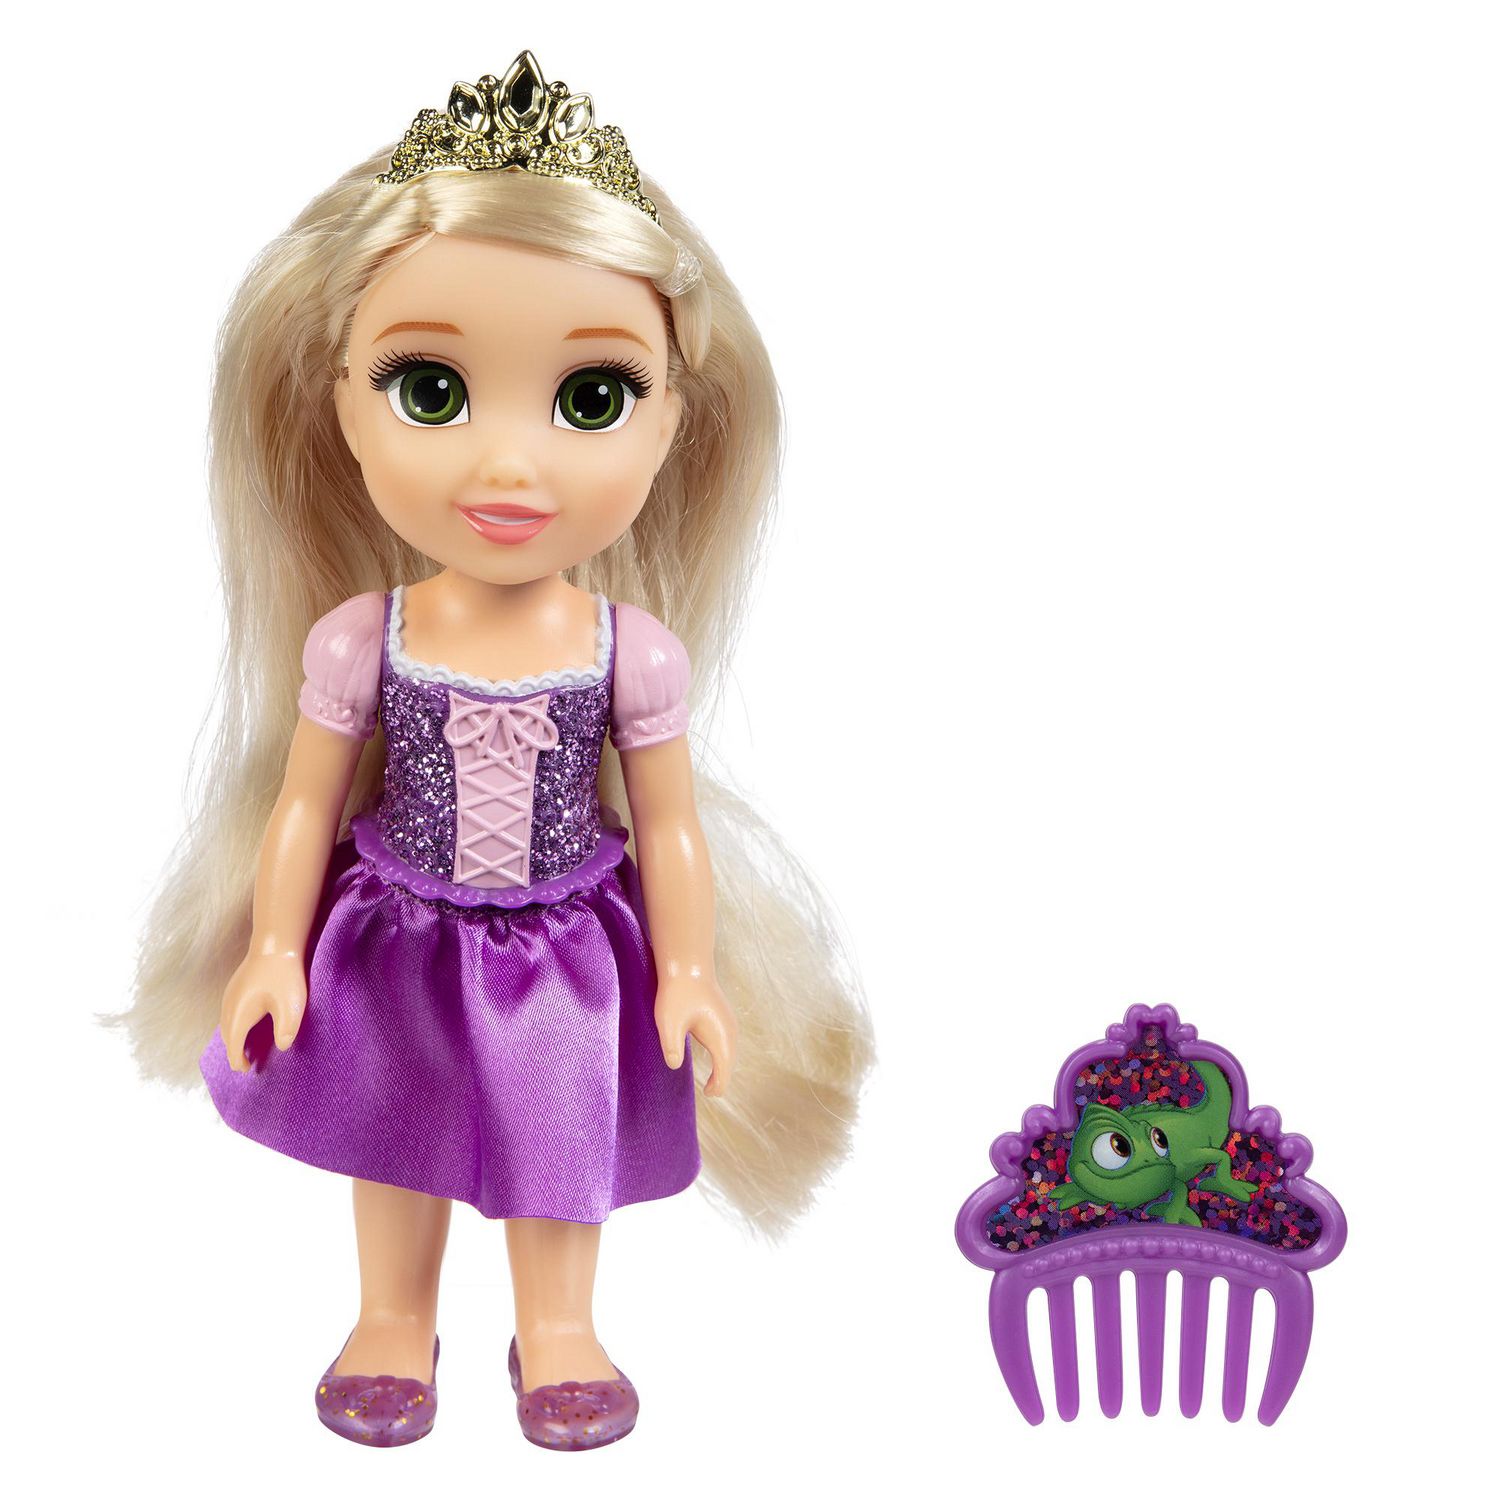 Disney Princesses - Poupee Princesse Disney Raiponce et sa longue